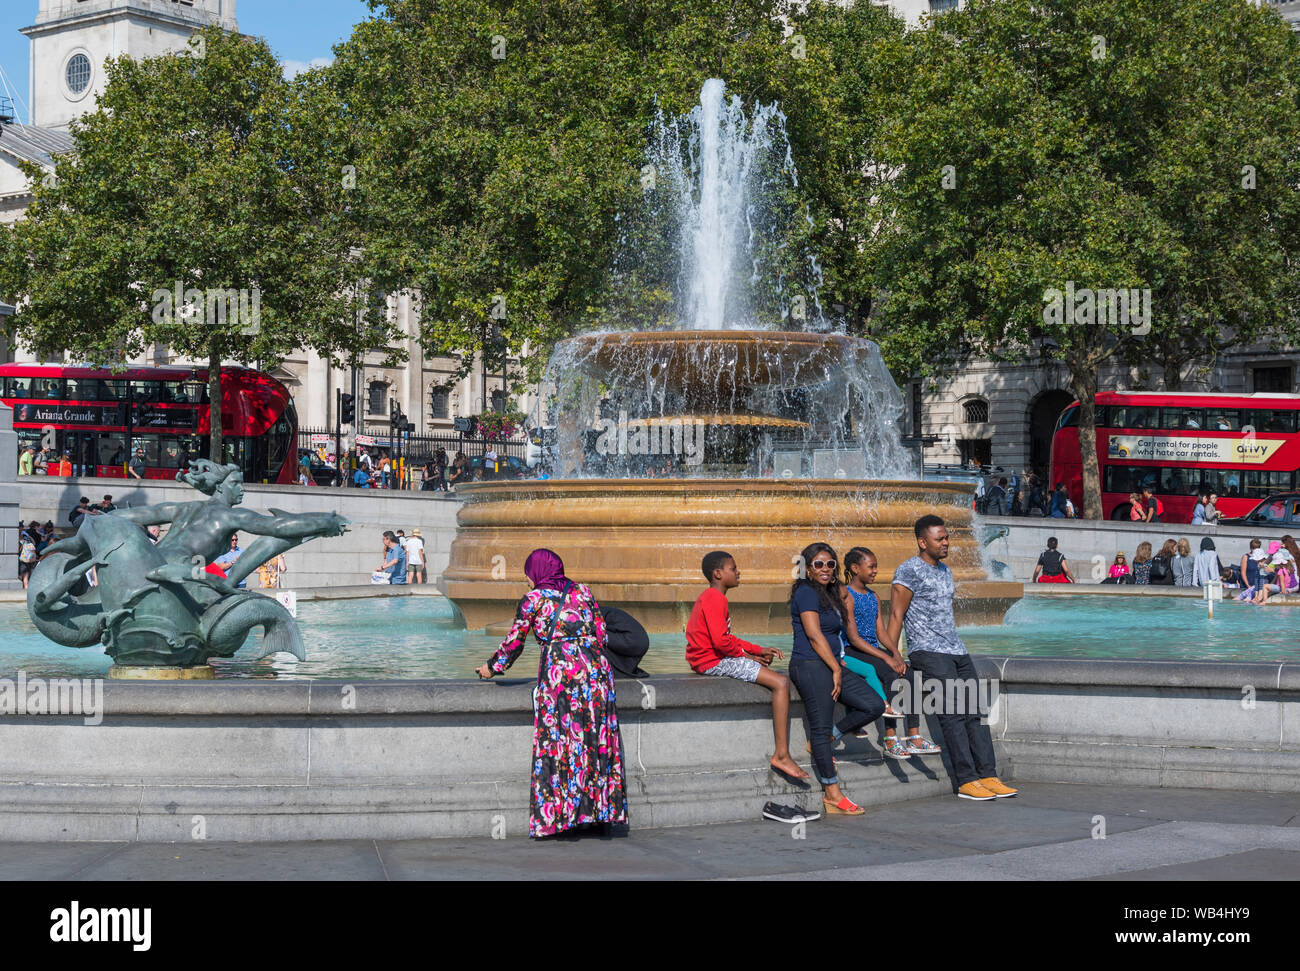 Fontaine et les touristes à Trafalgar Square, Charing Cross, City of Westminster, Londres, Angleterre, Royaume-Uni. Banque D'Images